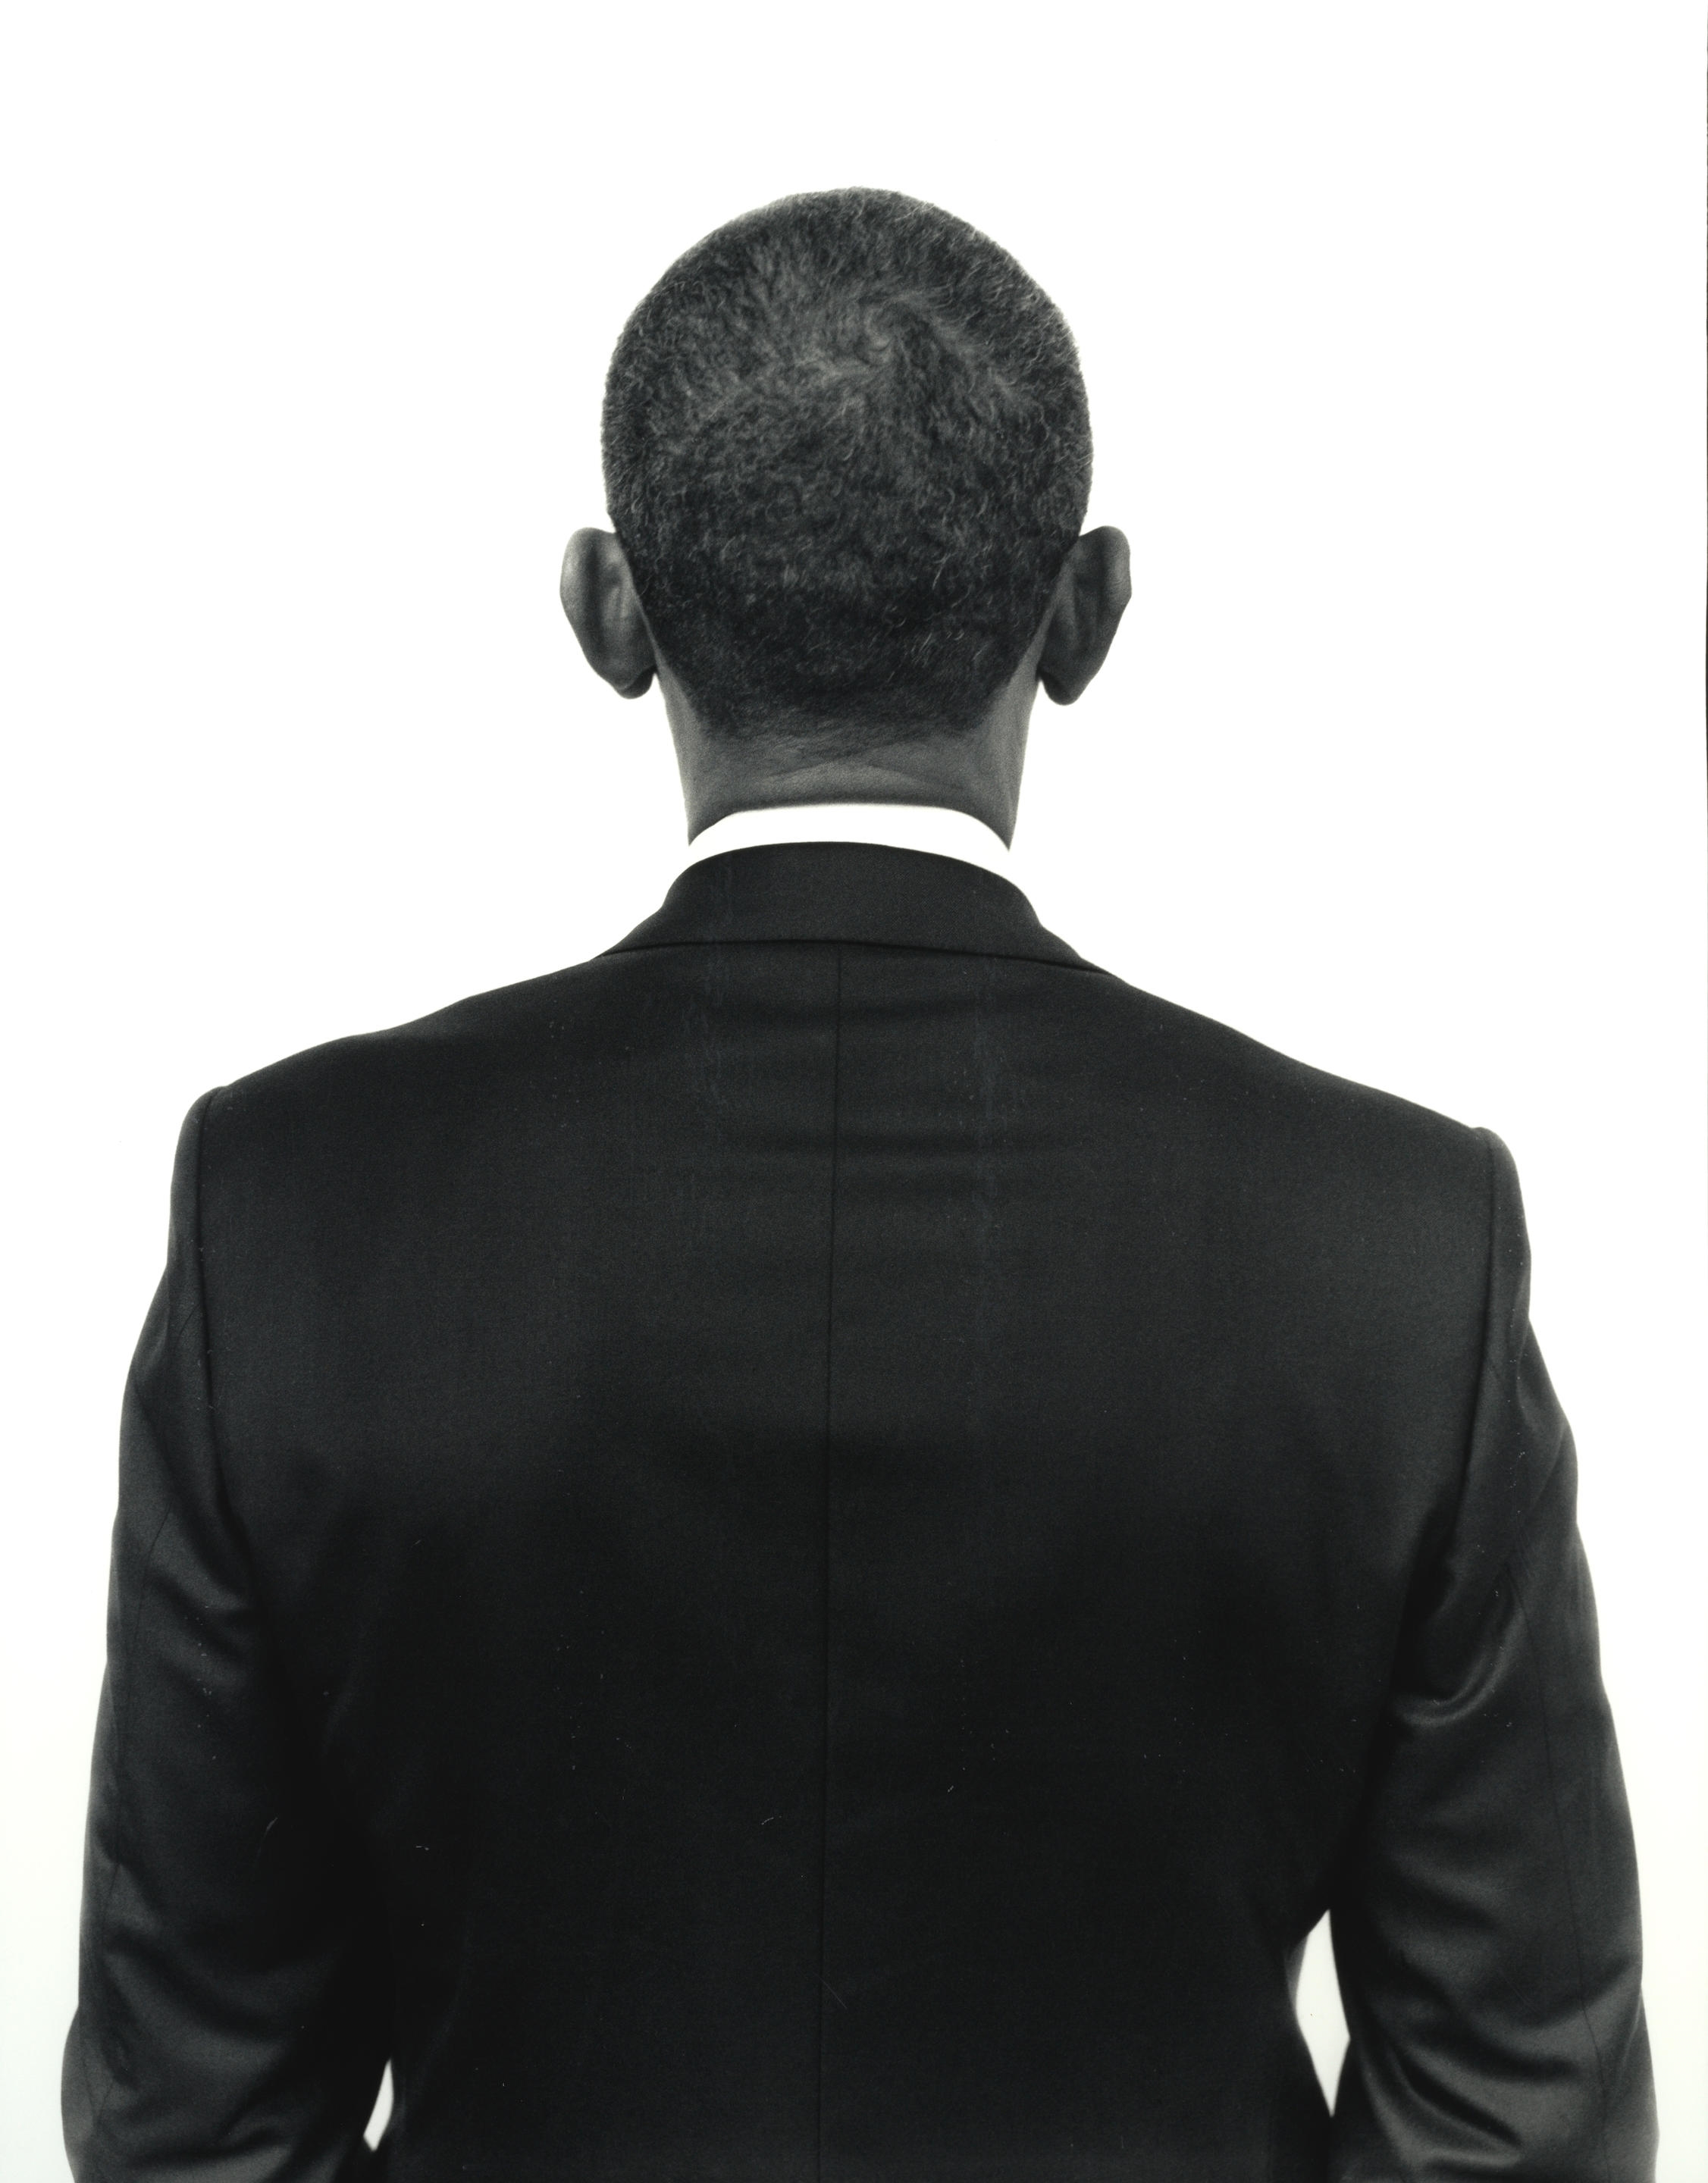 Barack Obama, Washington, D.C - Mark Seliger